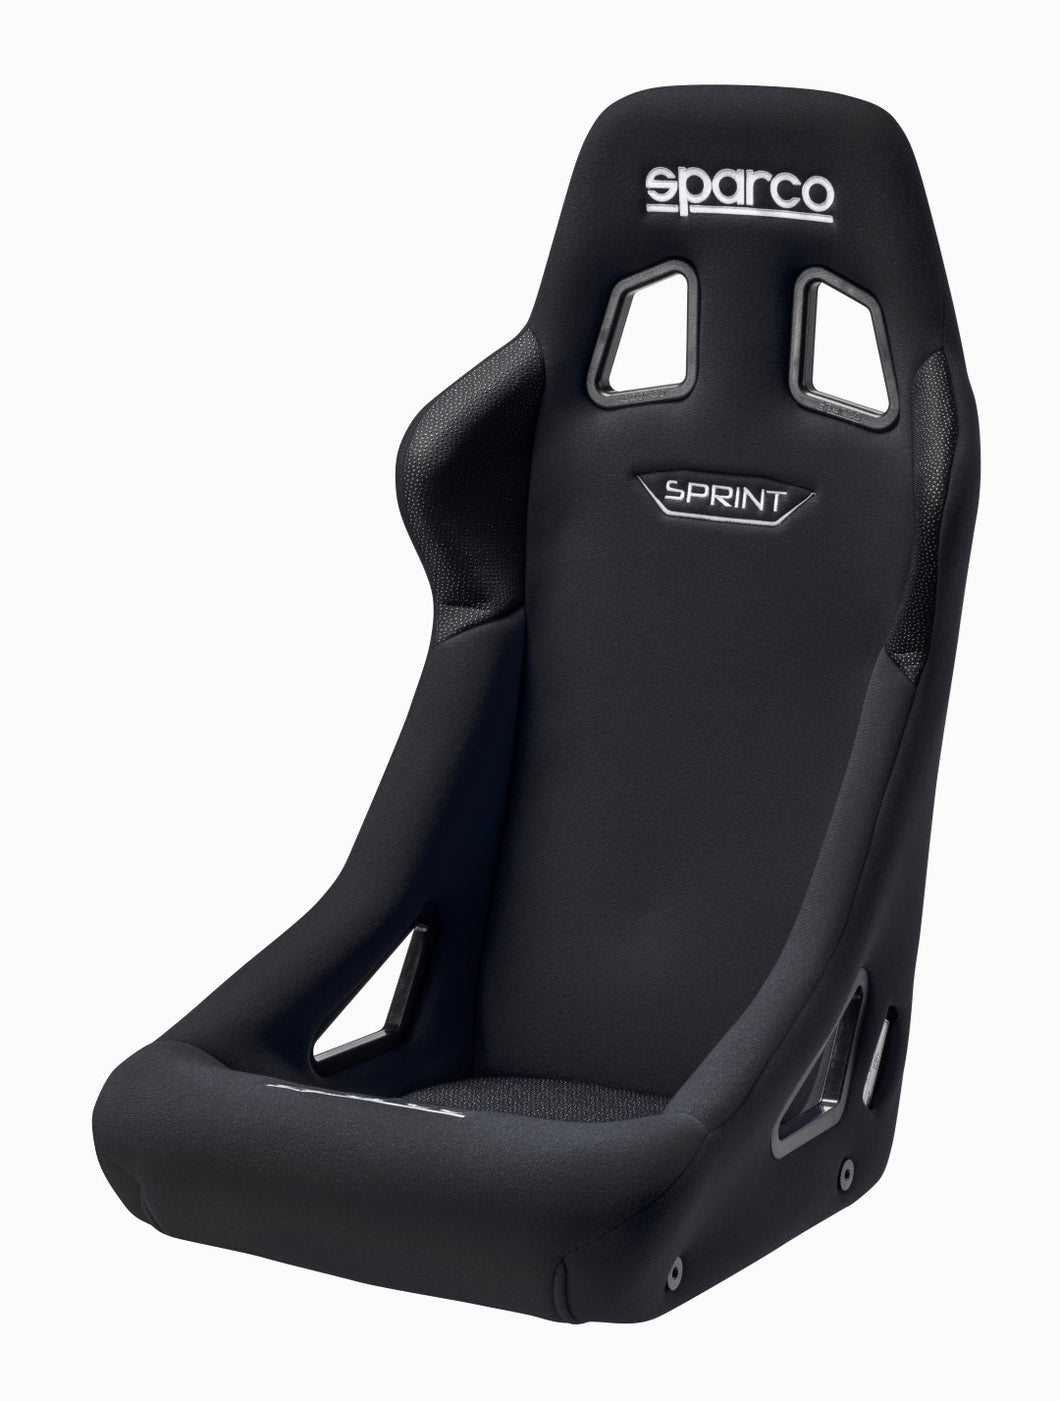 SPARCO RACING SEAT: SPRINT 2019 (BLACK)